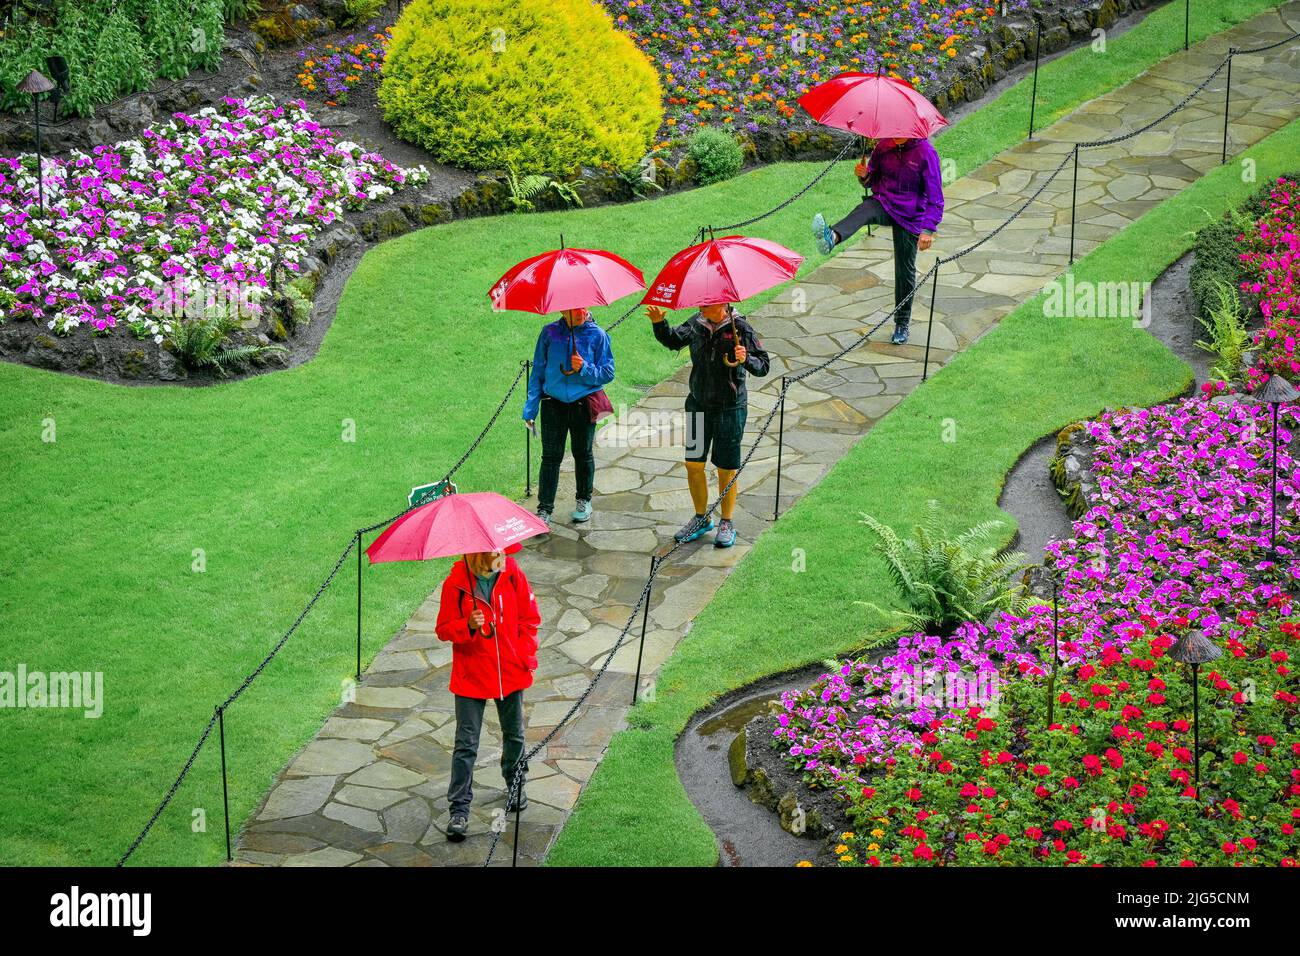 People with red umbrellas, Sunken Garden, Butchart Gardens, Brentwood Bay, Greater Victoria, British Columbia, Canada Stock Photo